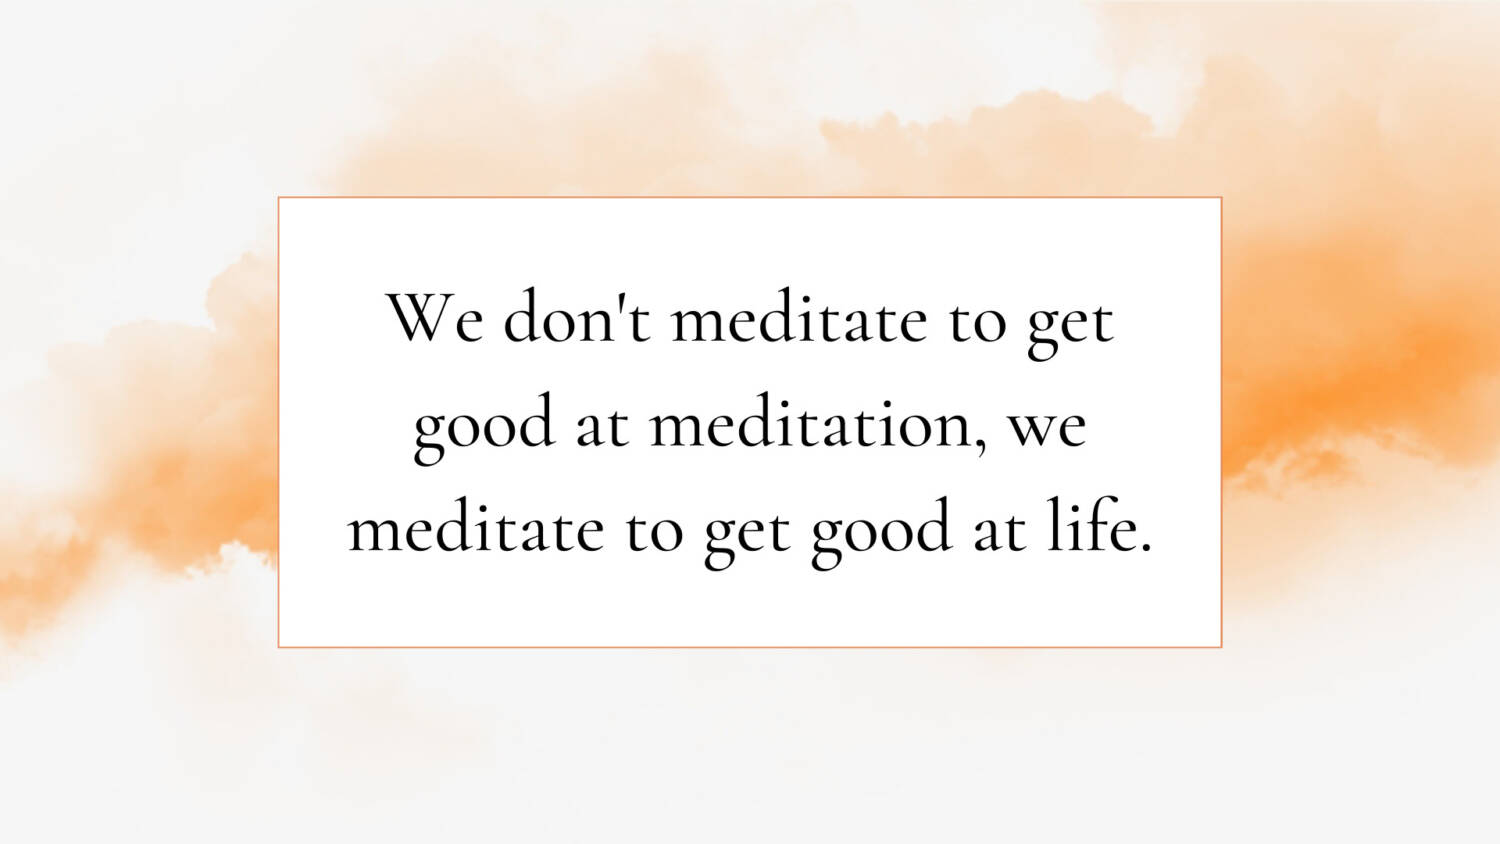 We don't meditate to get good at meditation, we meditate to get good at life.